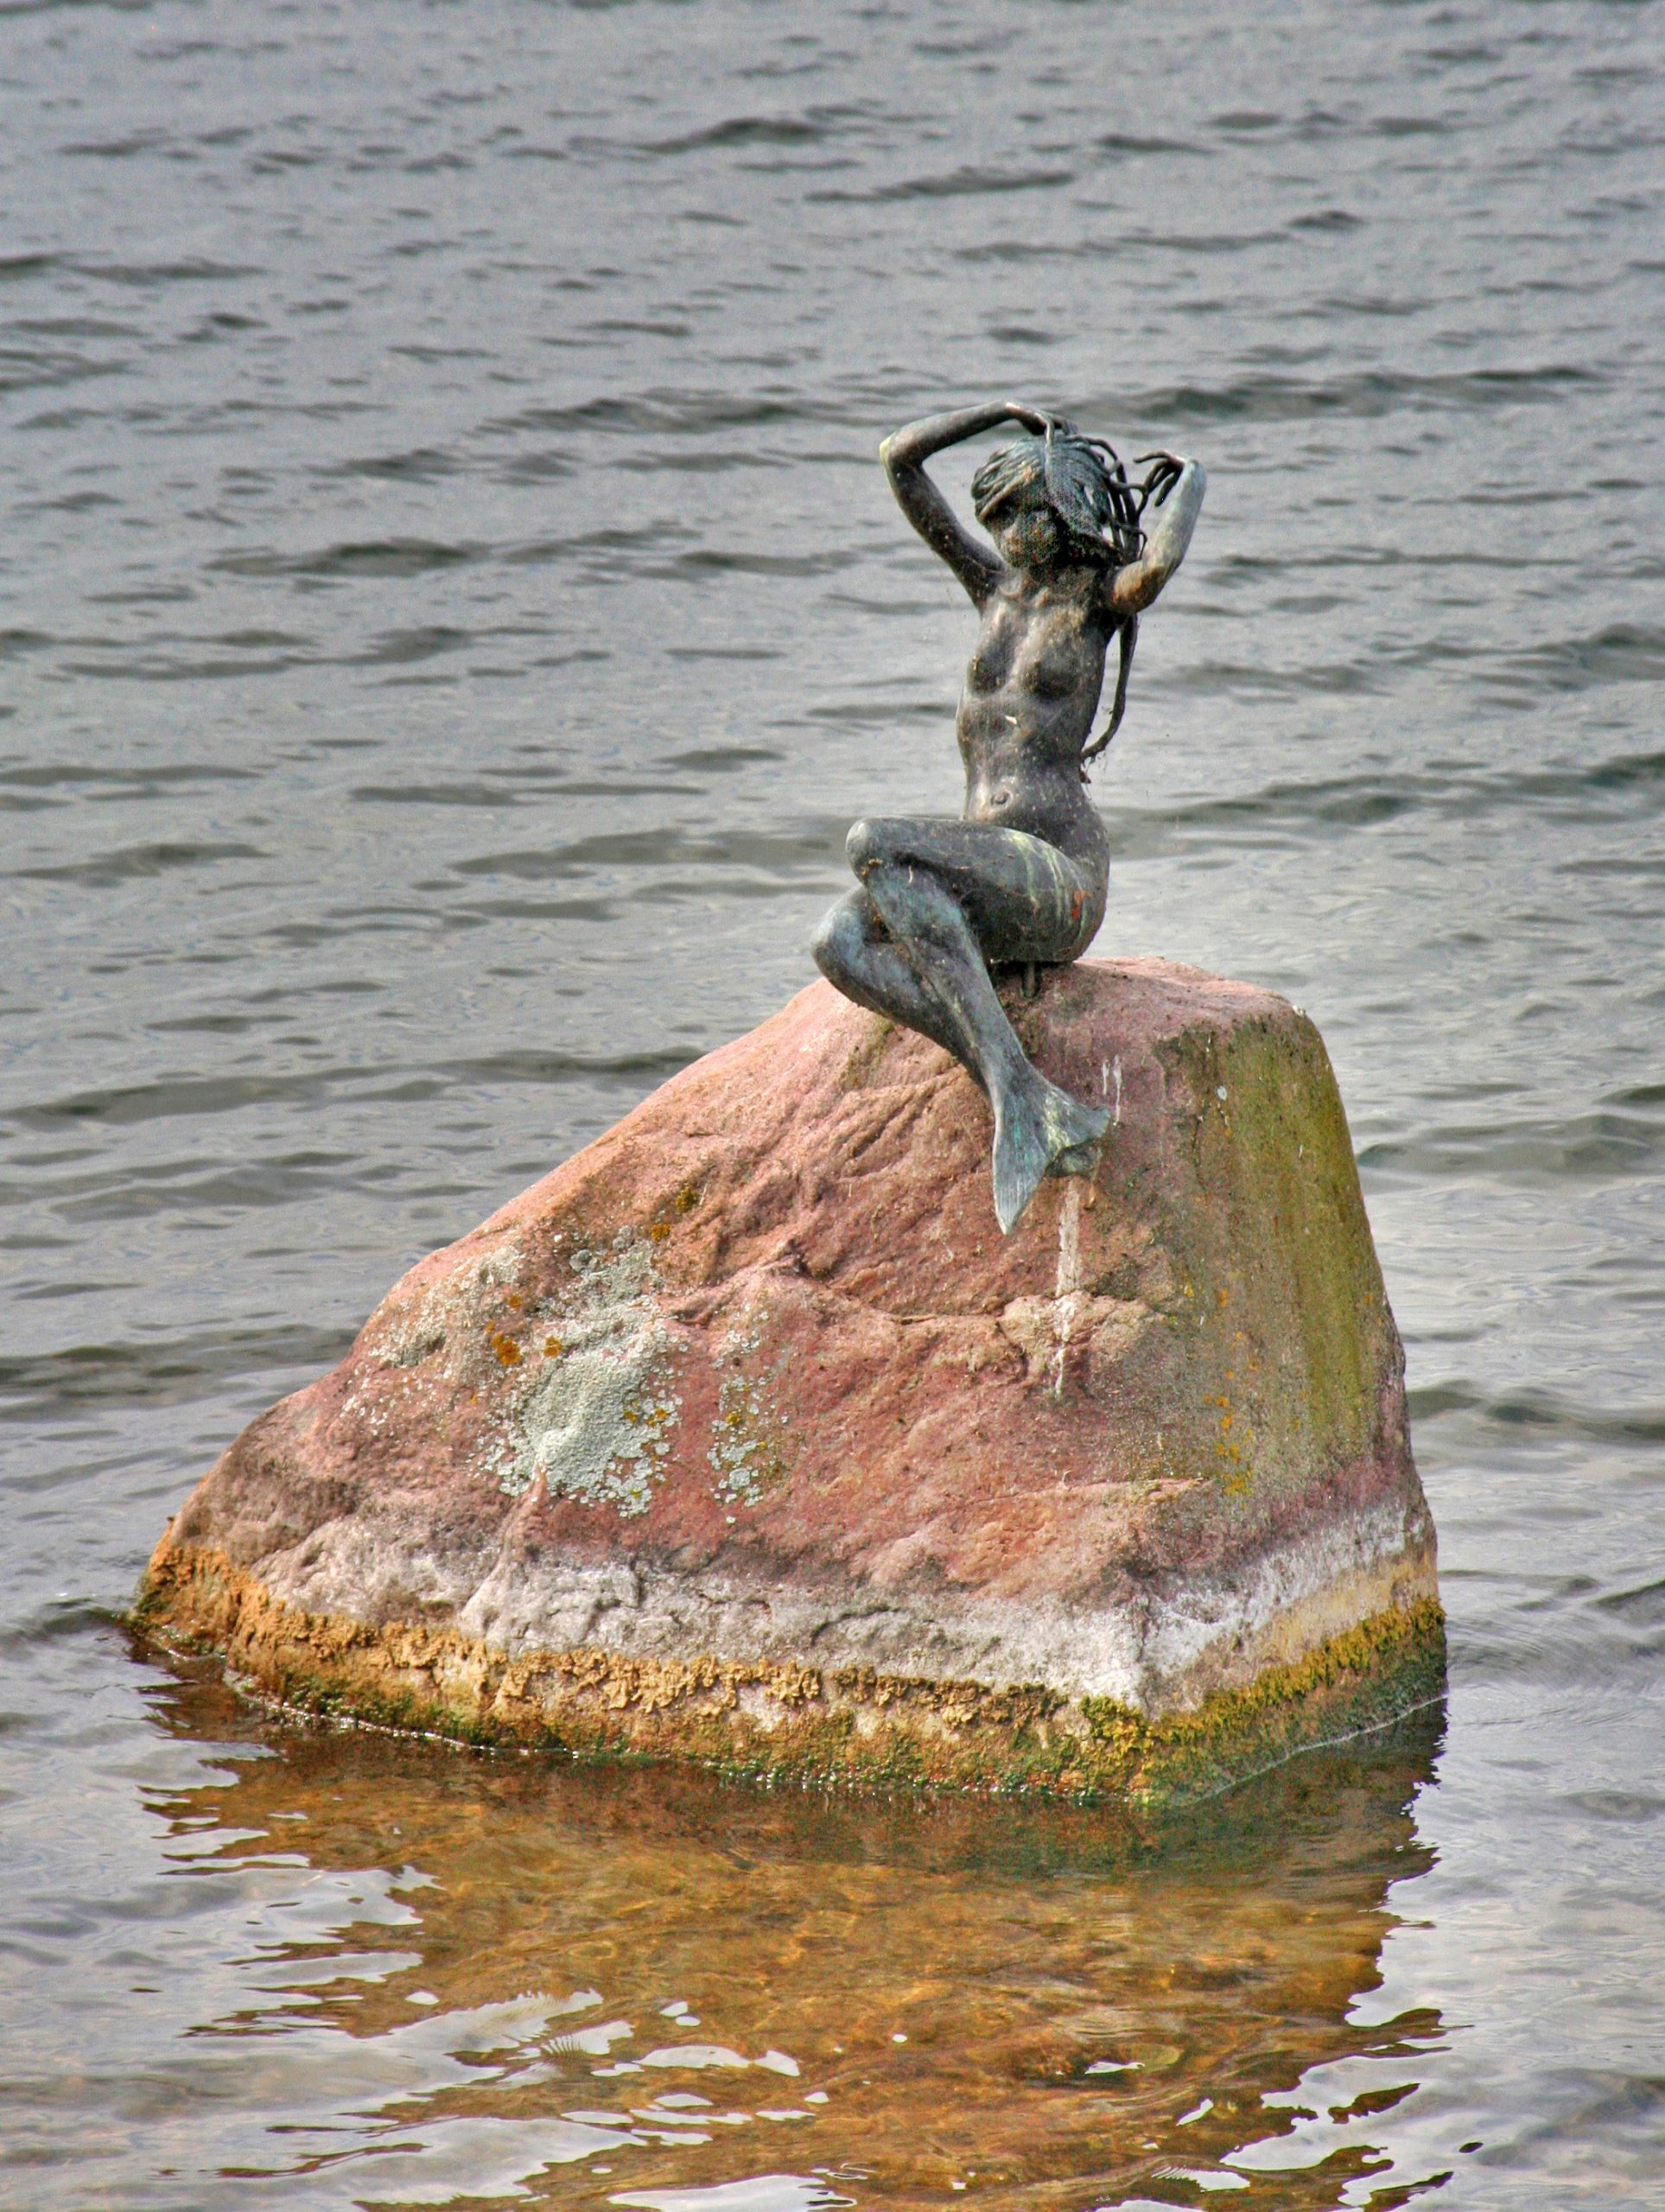 The Malenter Mermaid, Germany - Mermaids of Earth